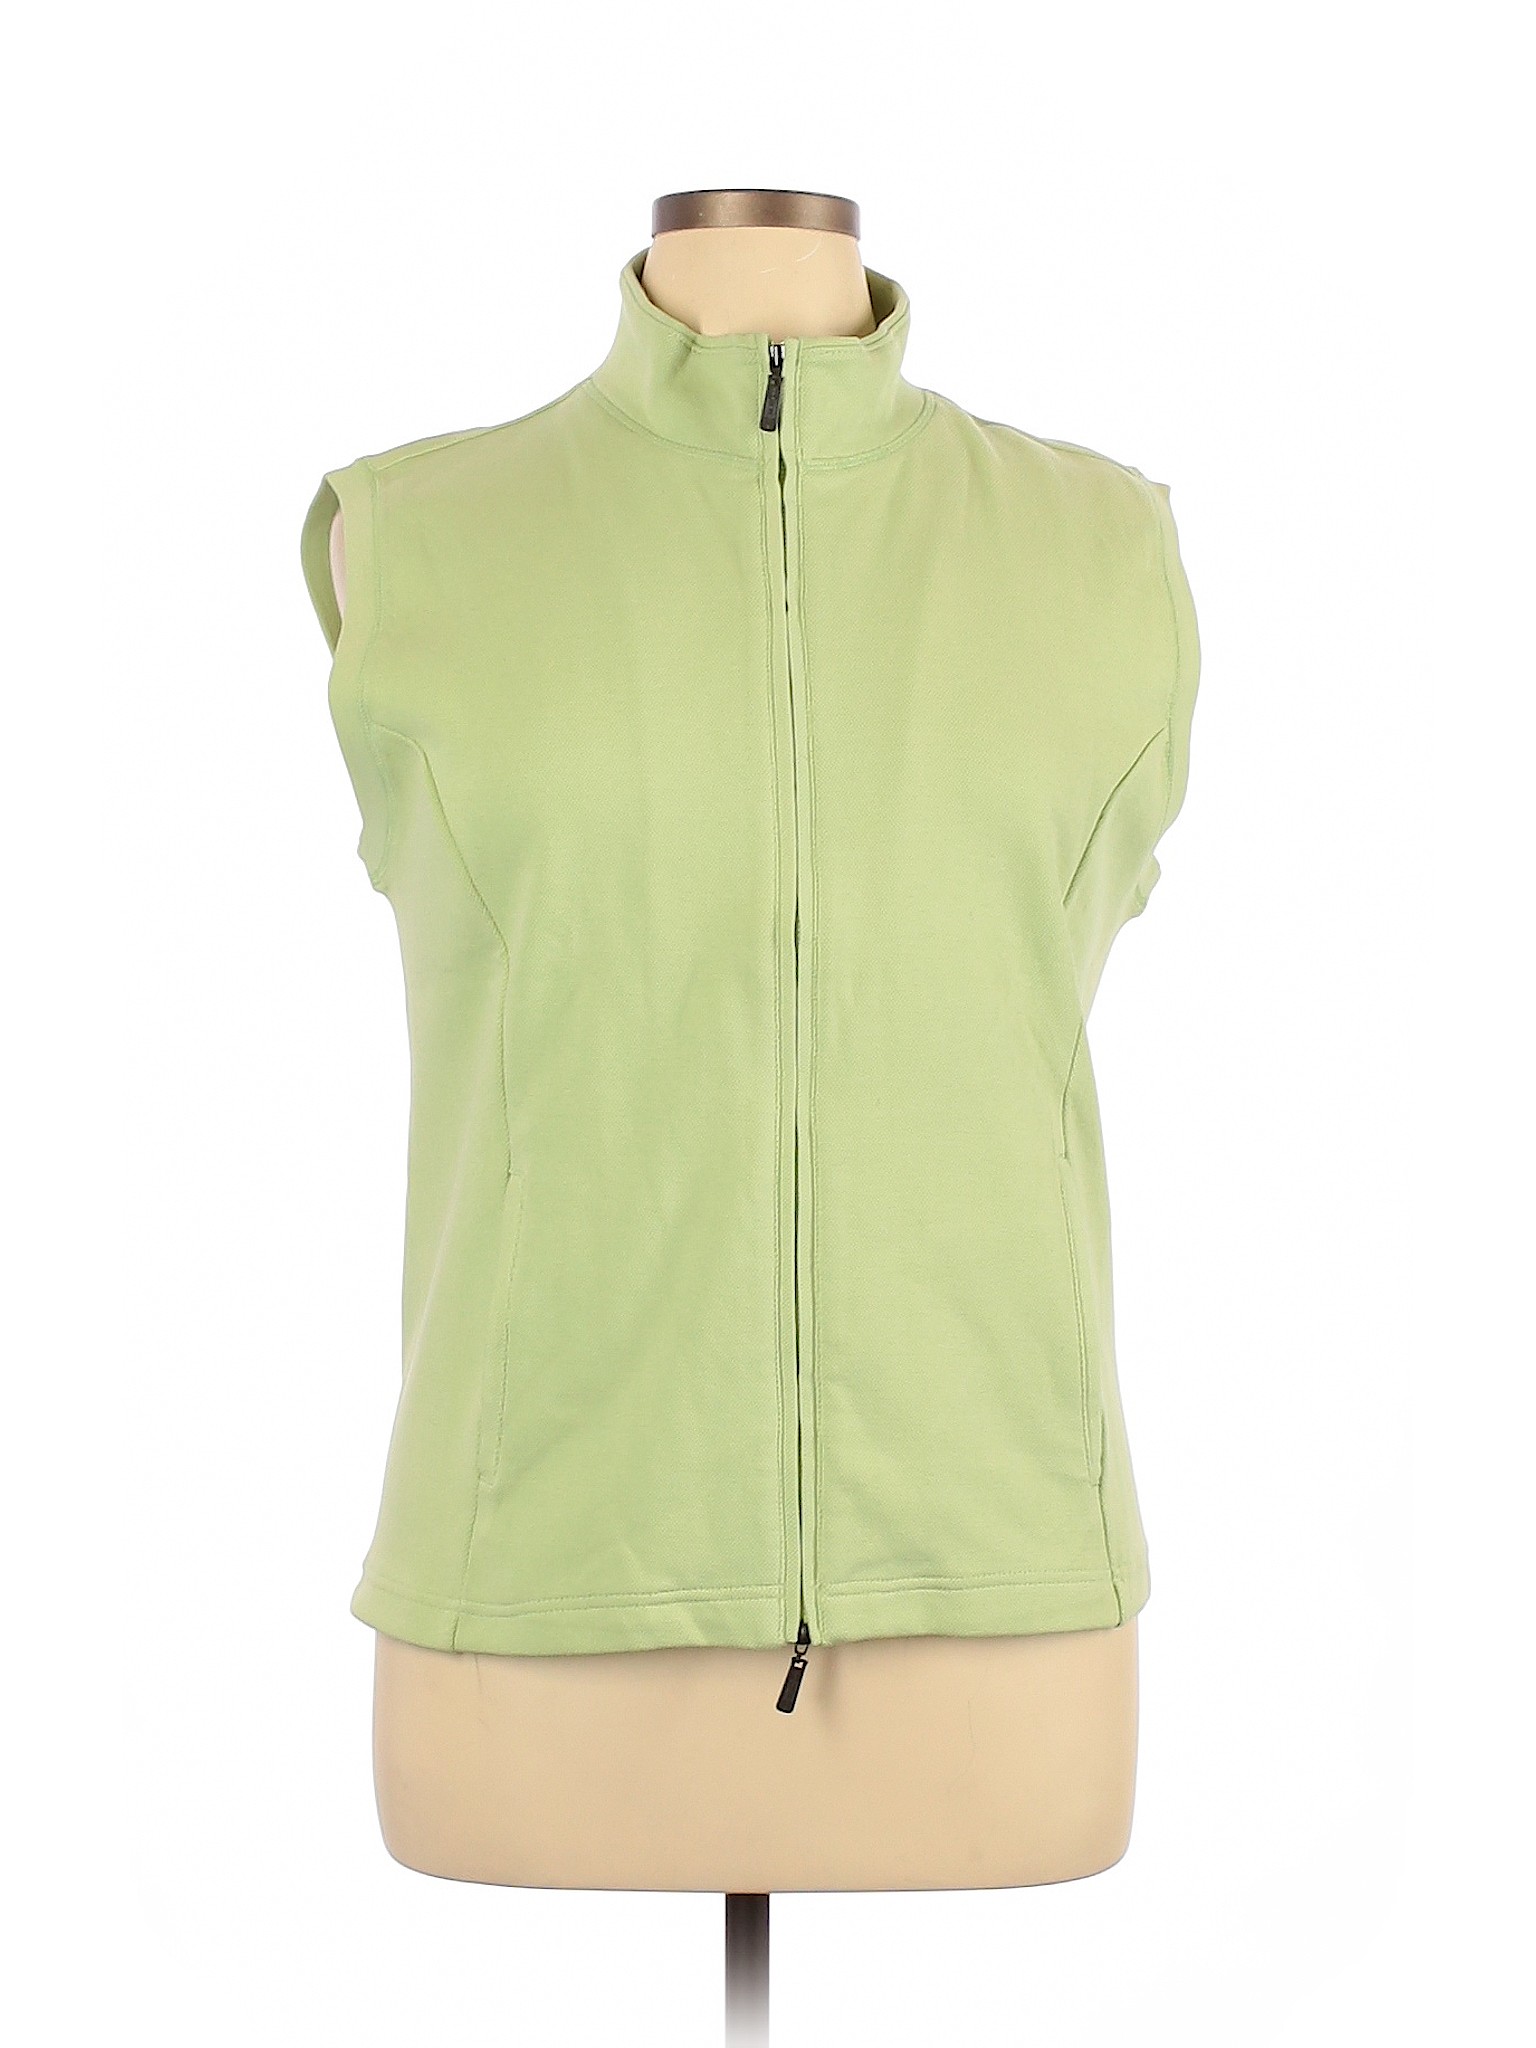 Unbranded Women Green Vest XL | eBay